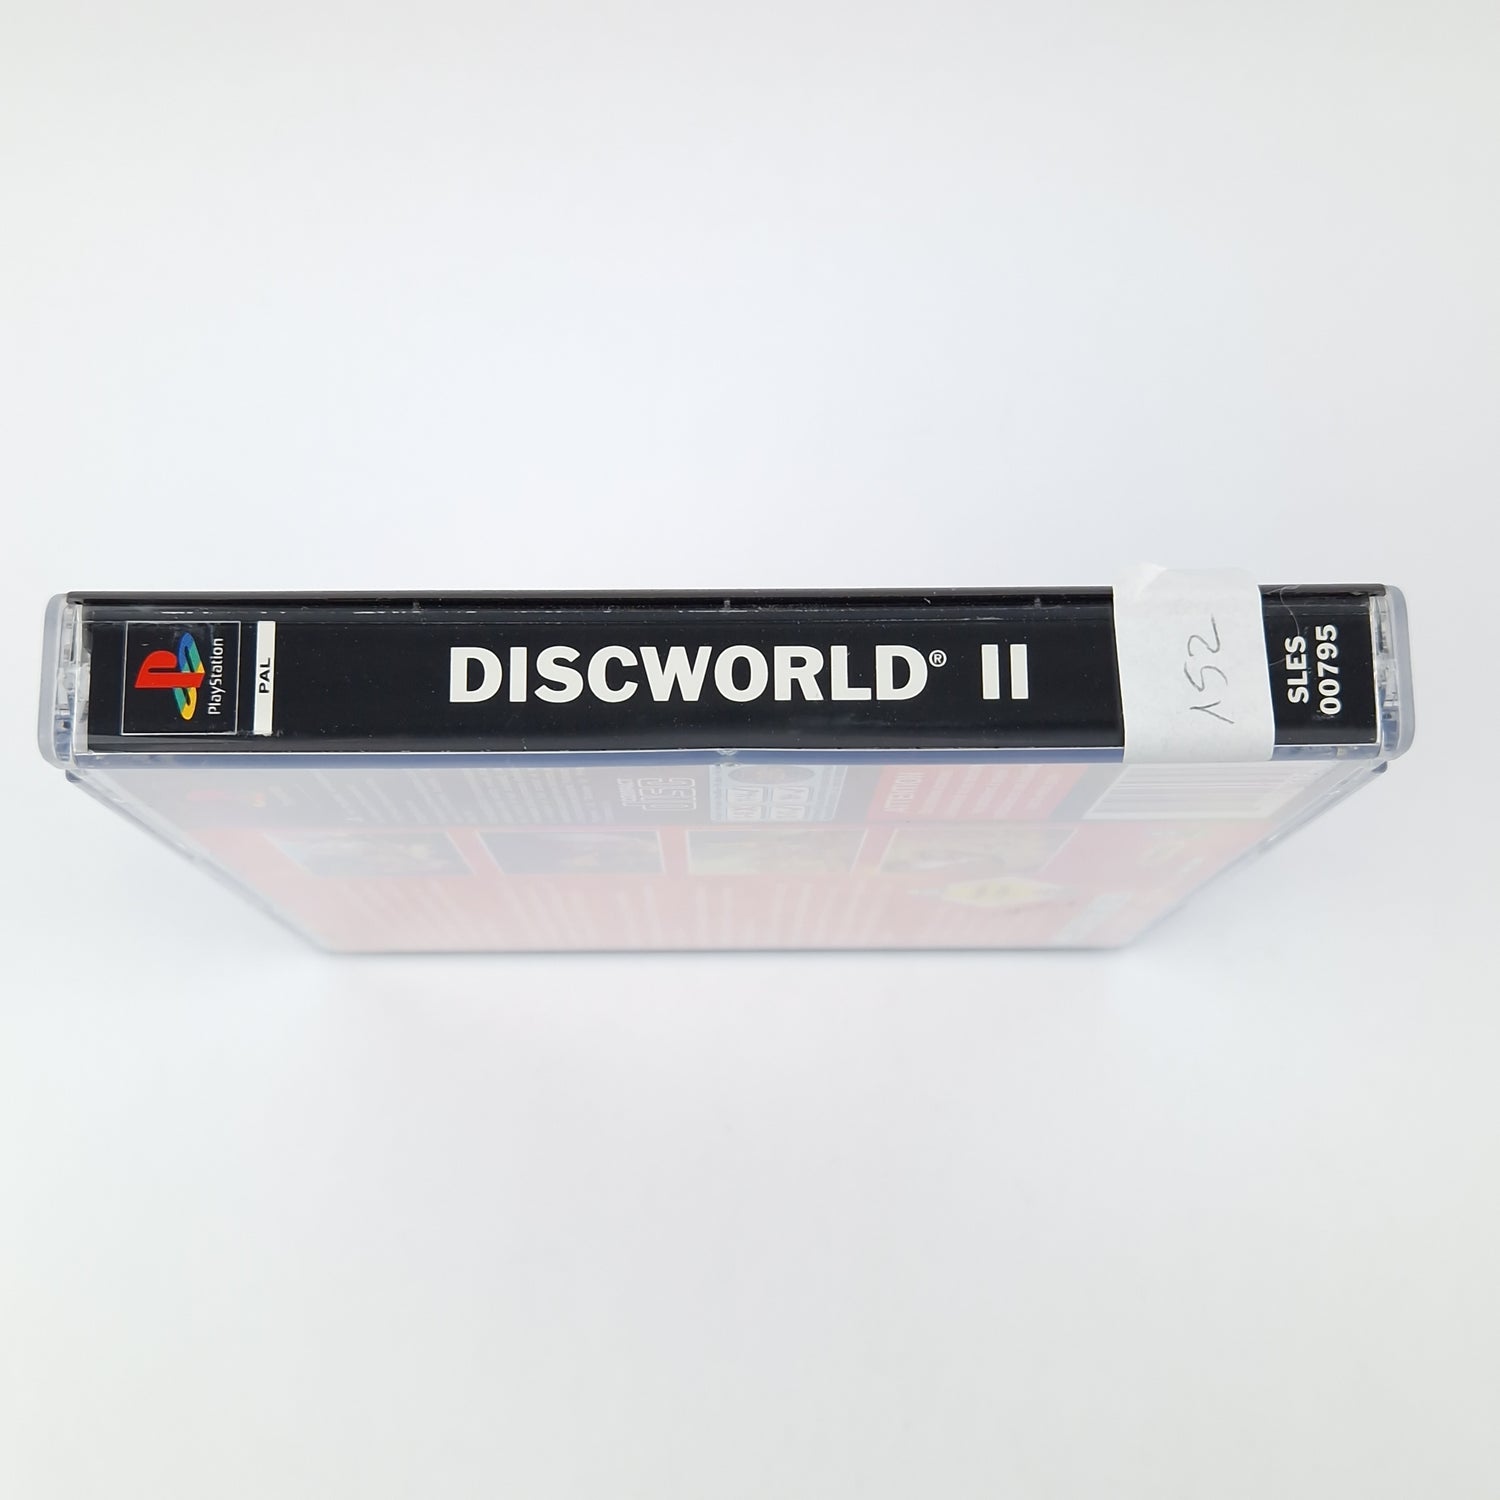 Playstation 1 Spiel : Discworld II - CD Anleitung OVP | PS1 PSX PSone PAL